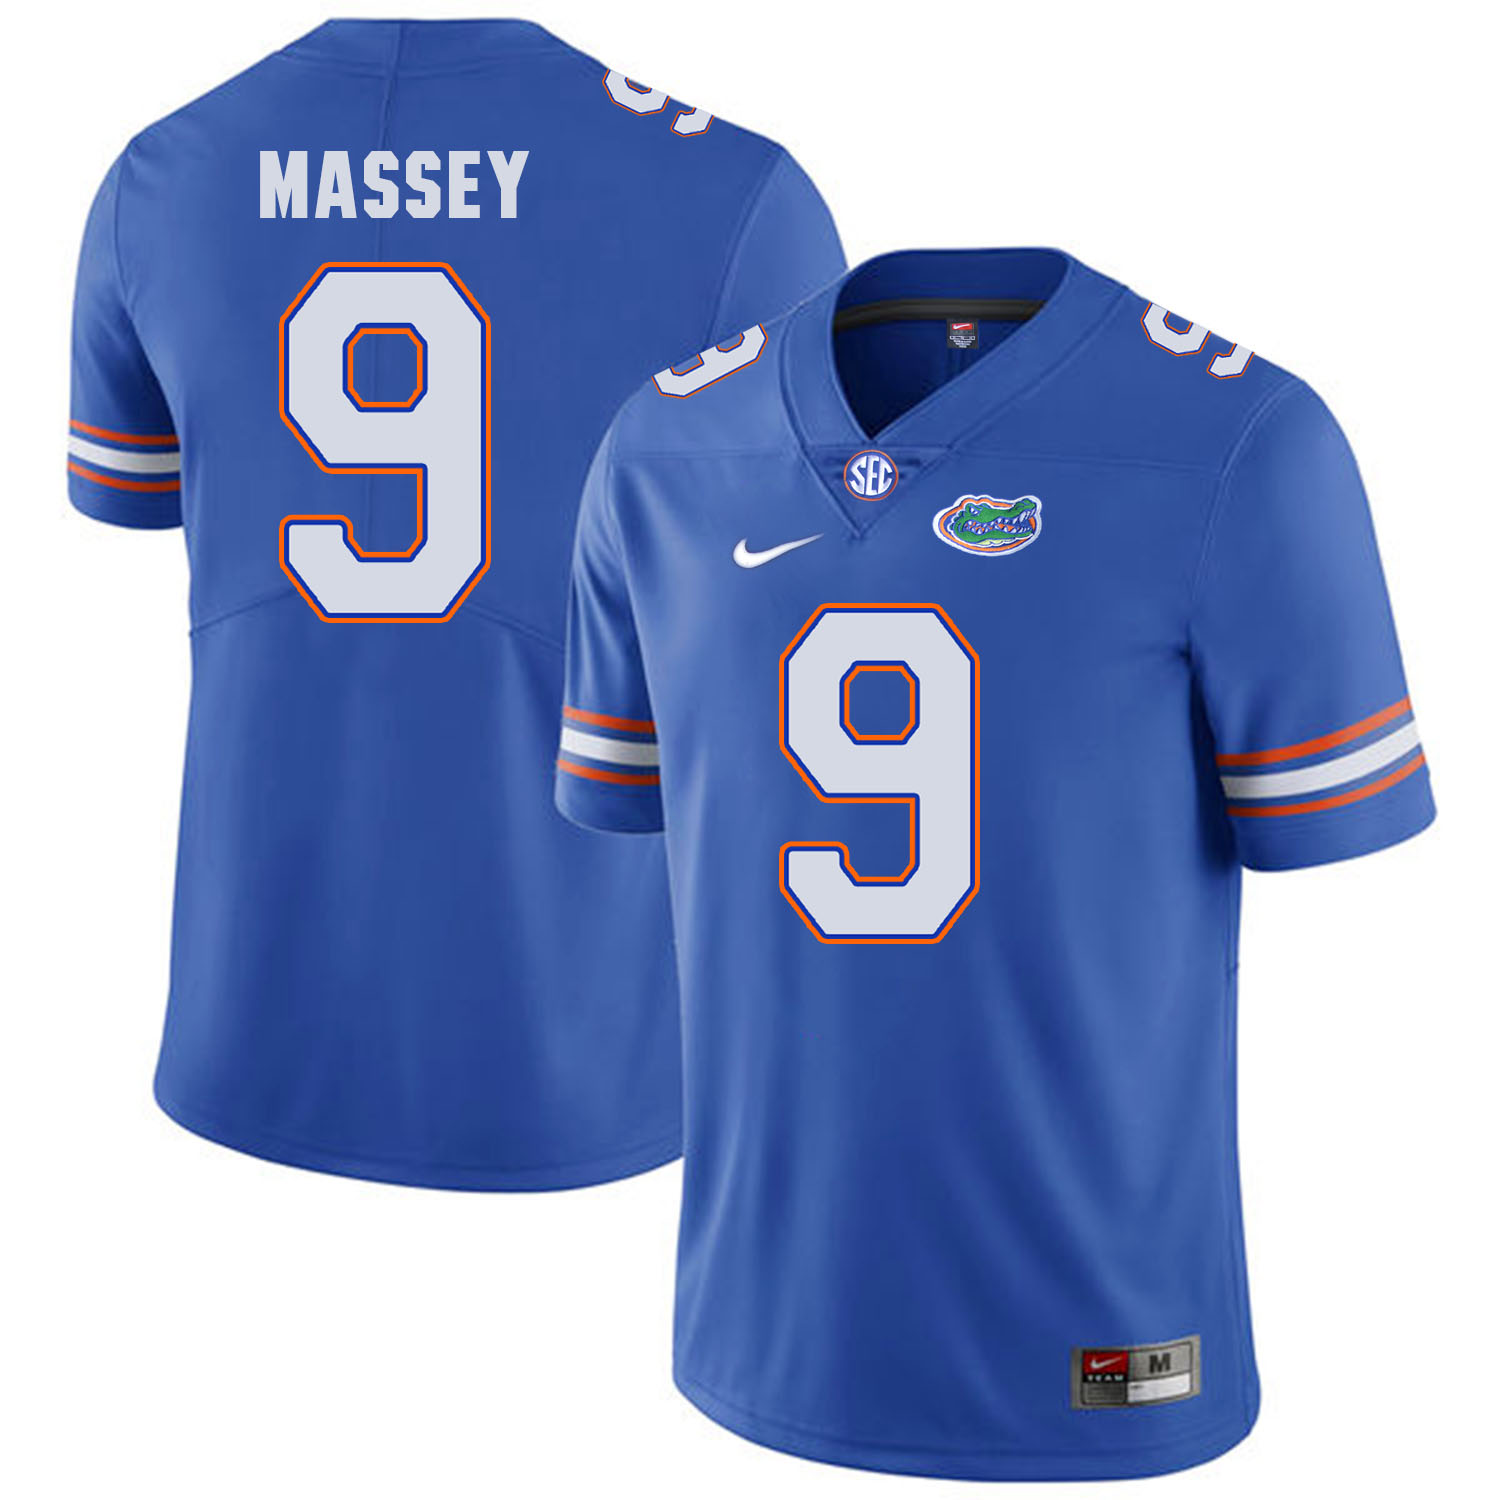 Florida Gators 9 Dre Massey Blue College Football Jersey